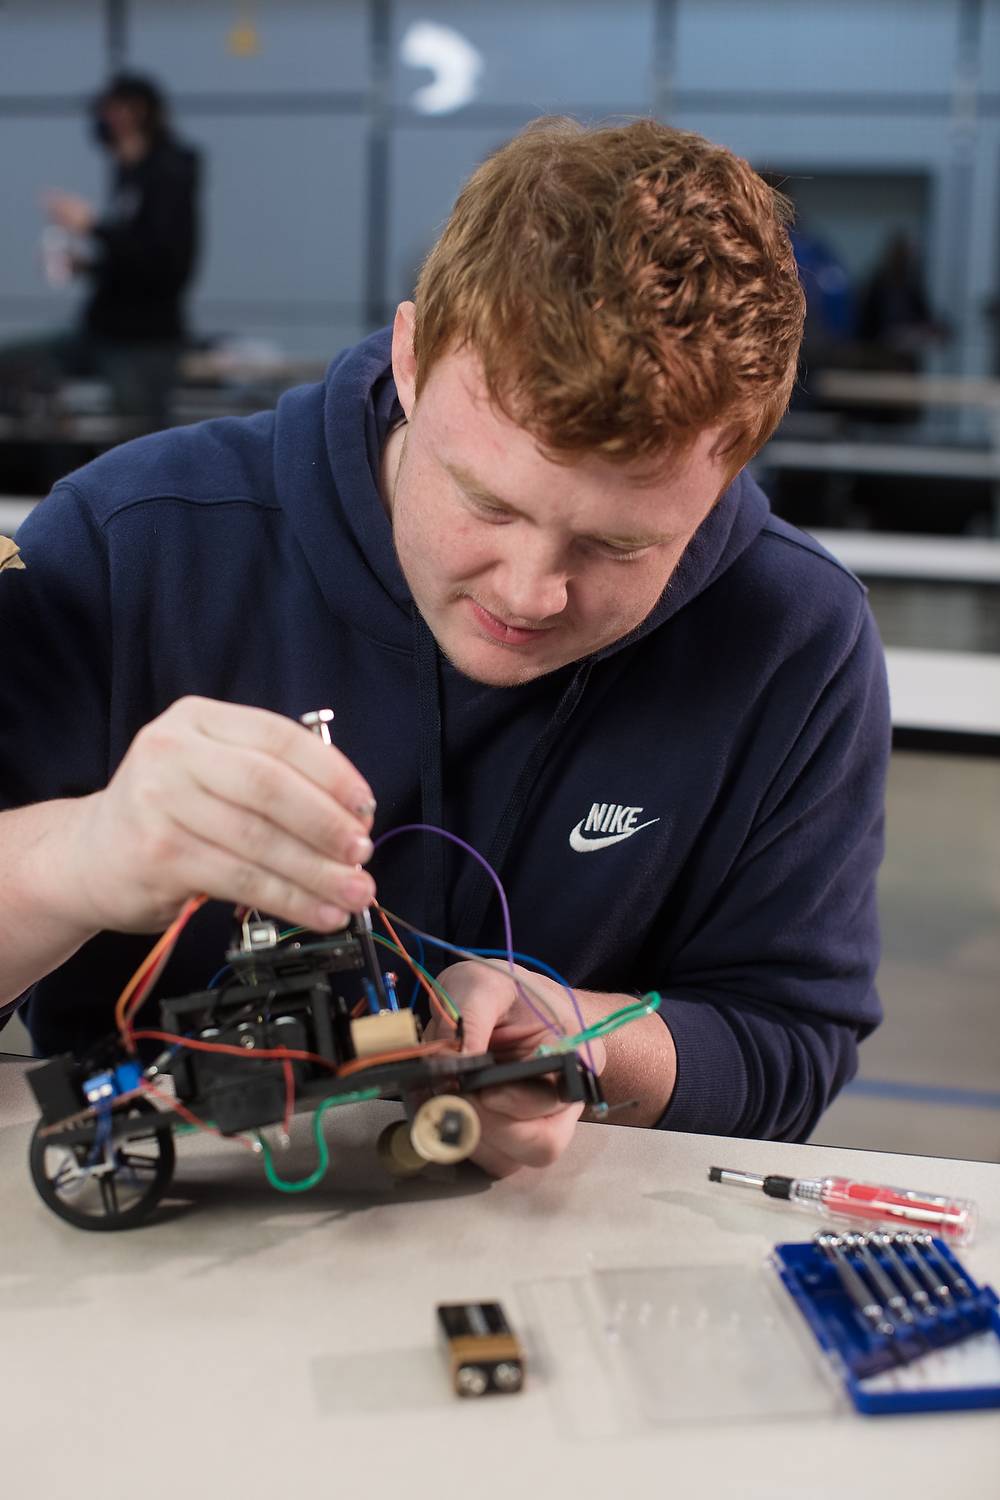 Student builds robot